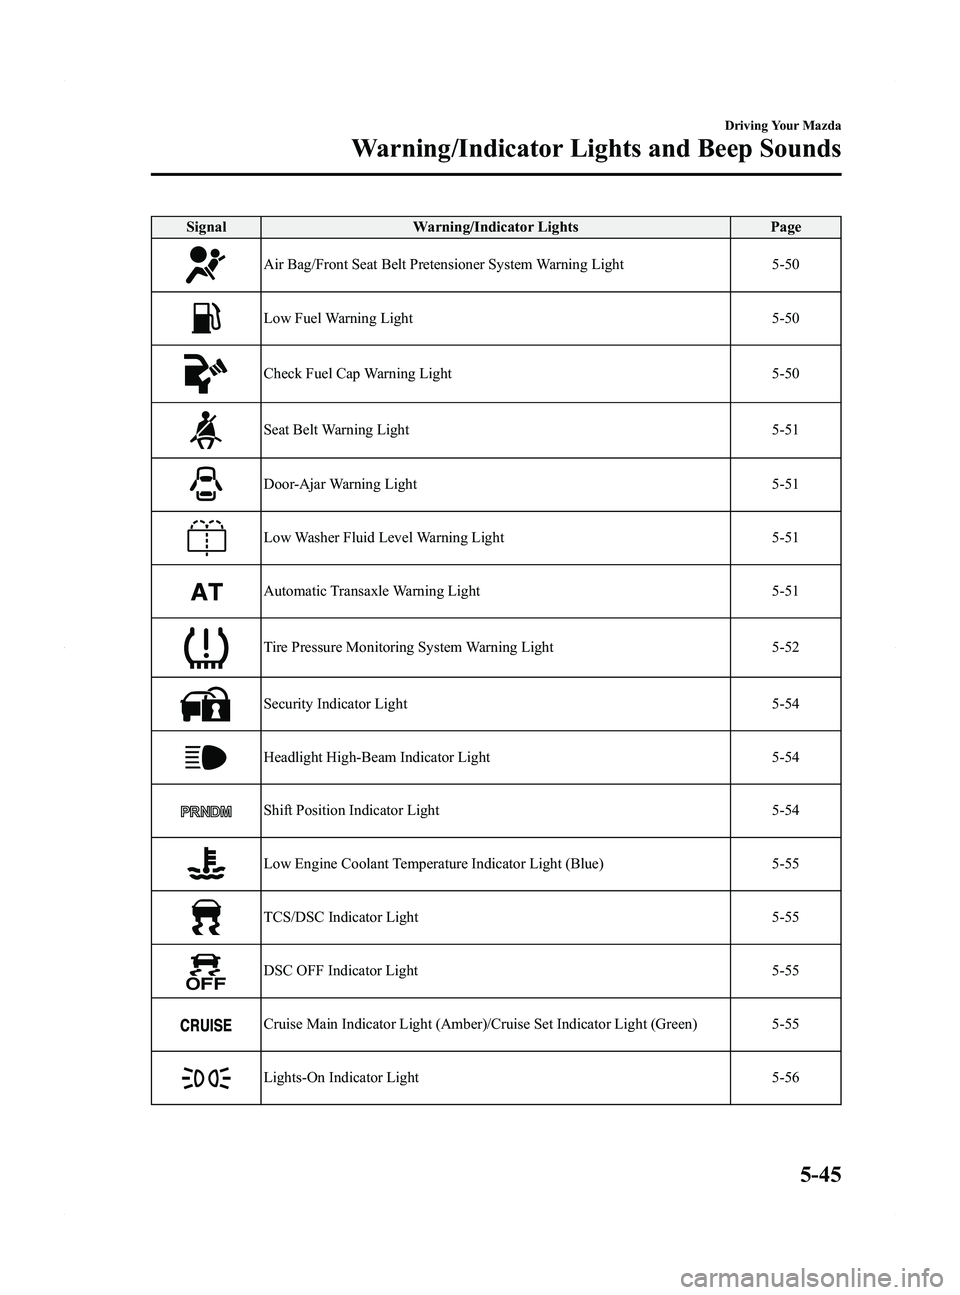 MAZDA MODEL 5 2015  Owners Manual Black plate (171,1)
SignalWarning/Indicator Lights Page
Air Bag/Front Seat Belt Pretensioner System Warning Light 5-50
Low Fuel Warning Light5-50
Check Fuel Cap Warning Light5-50
Seat Belt Warning Lig